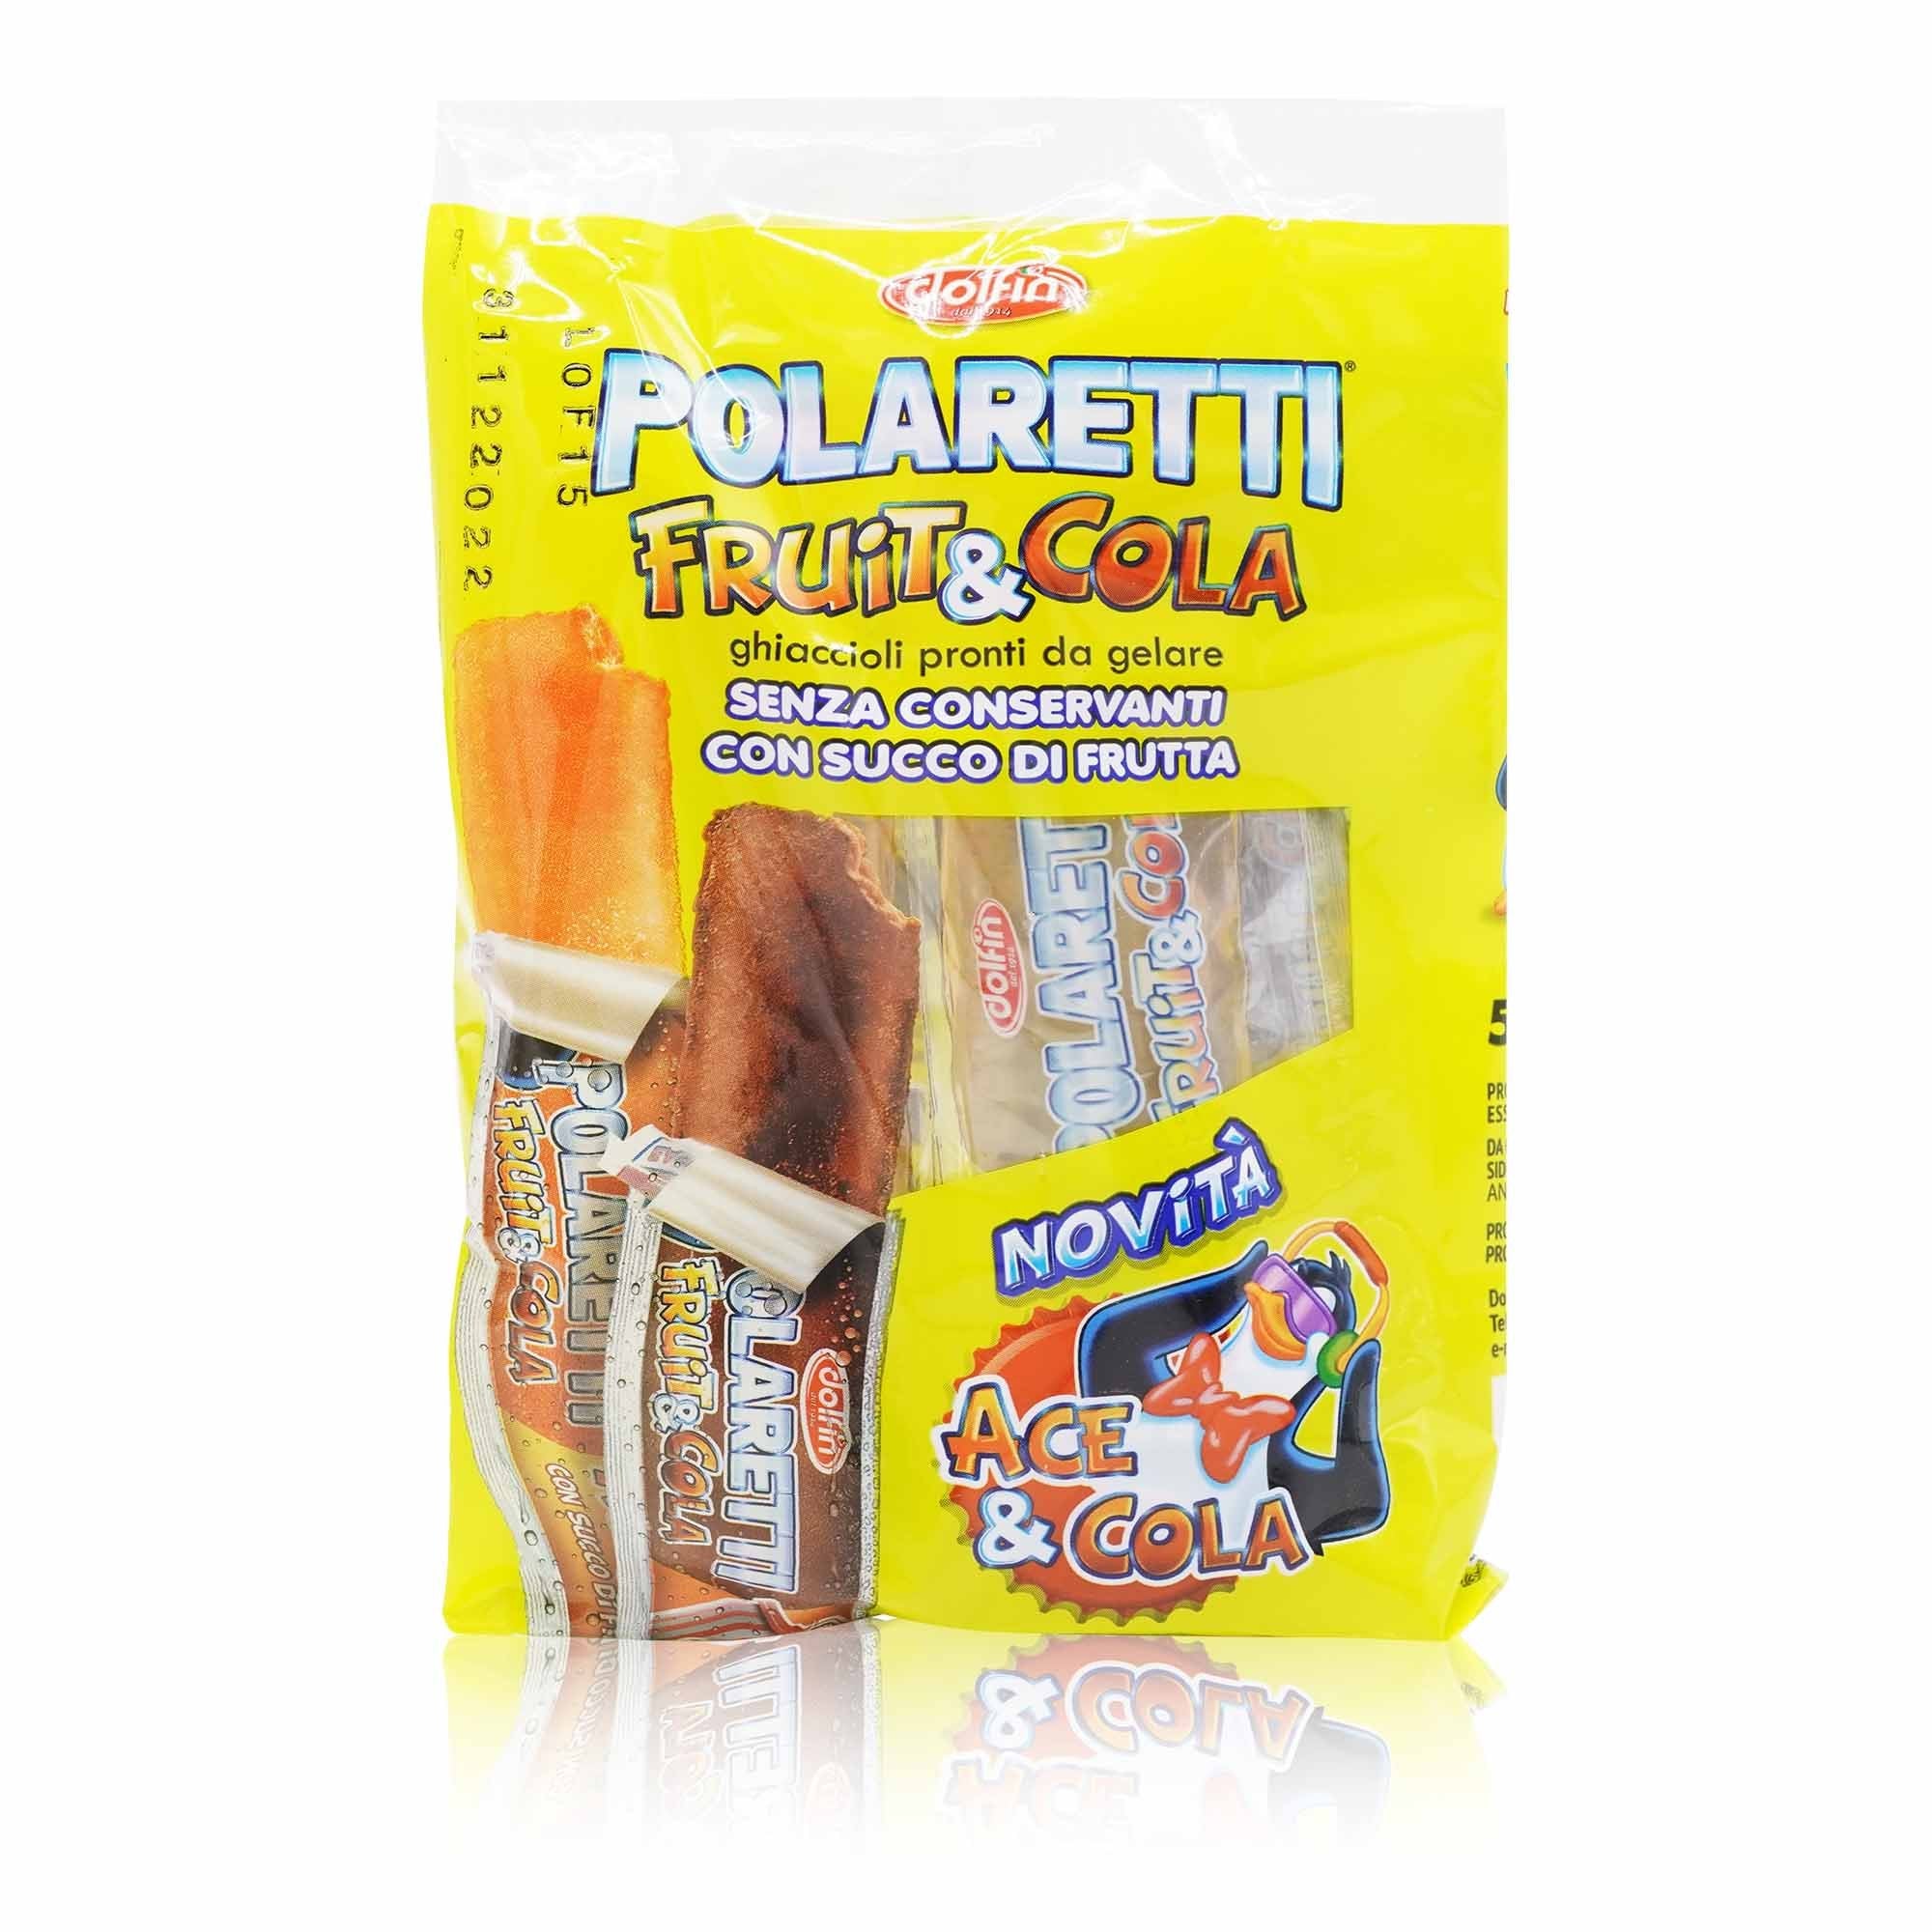 DOLFIN Polaretti fruit&Cola – Wassereis Polaretti Fruit&Cola - 0,150l - italienisch-einkaufen.de